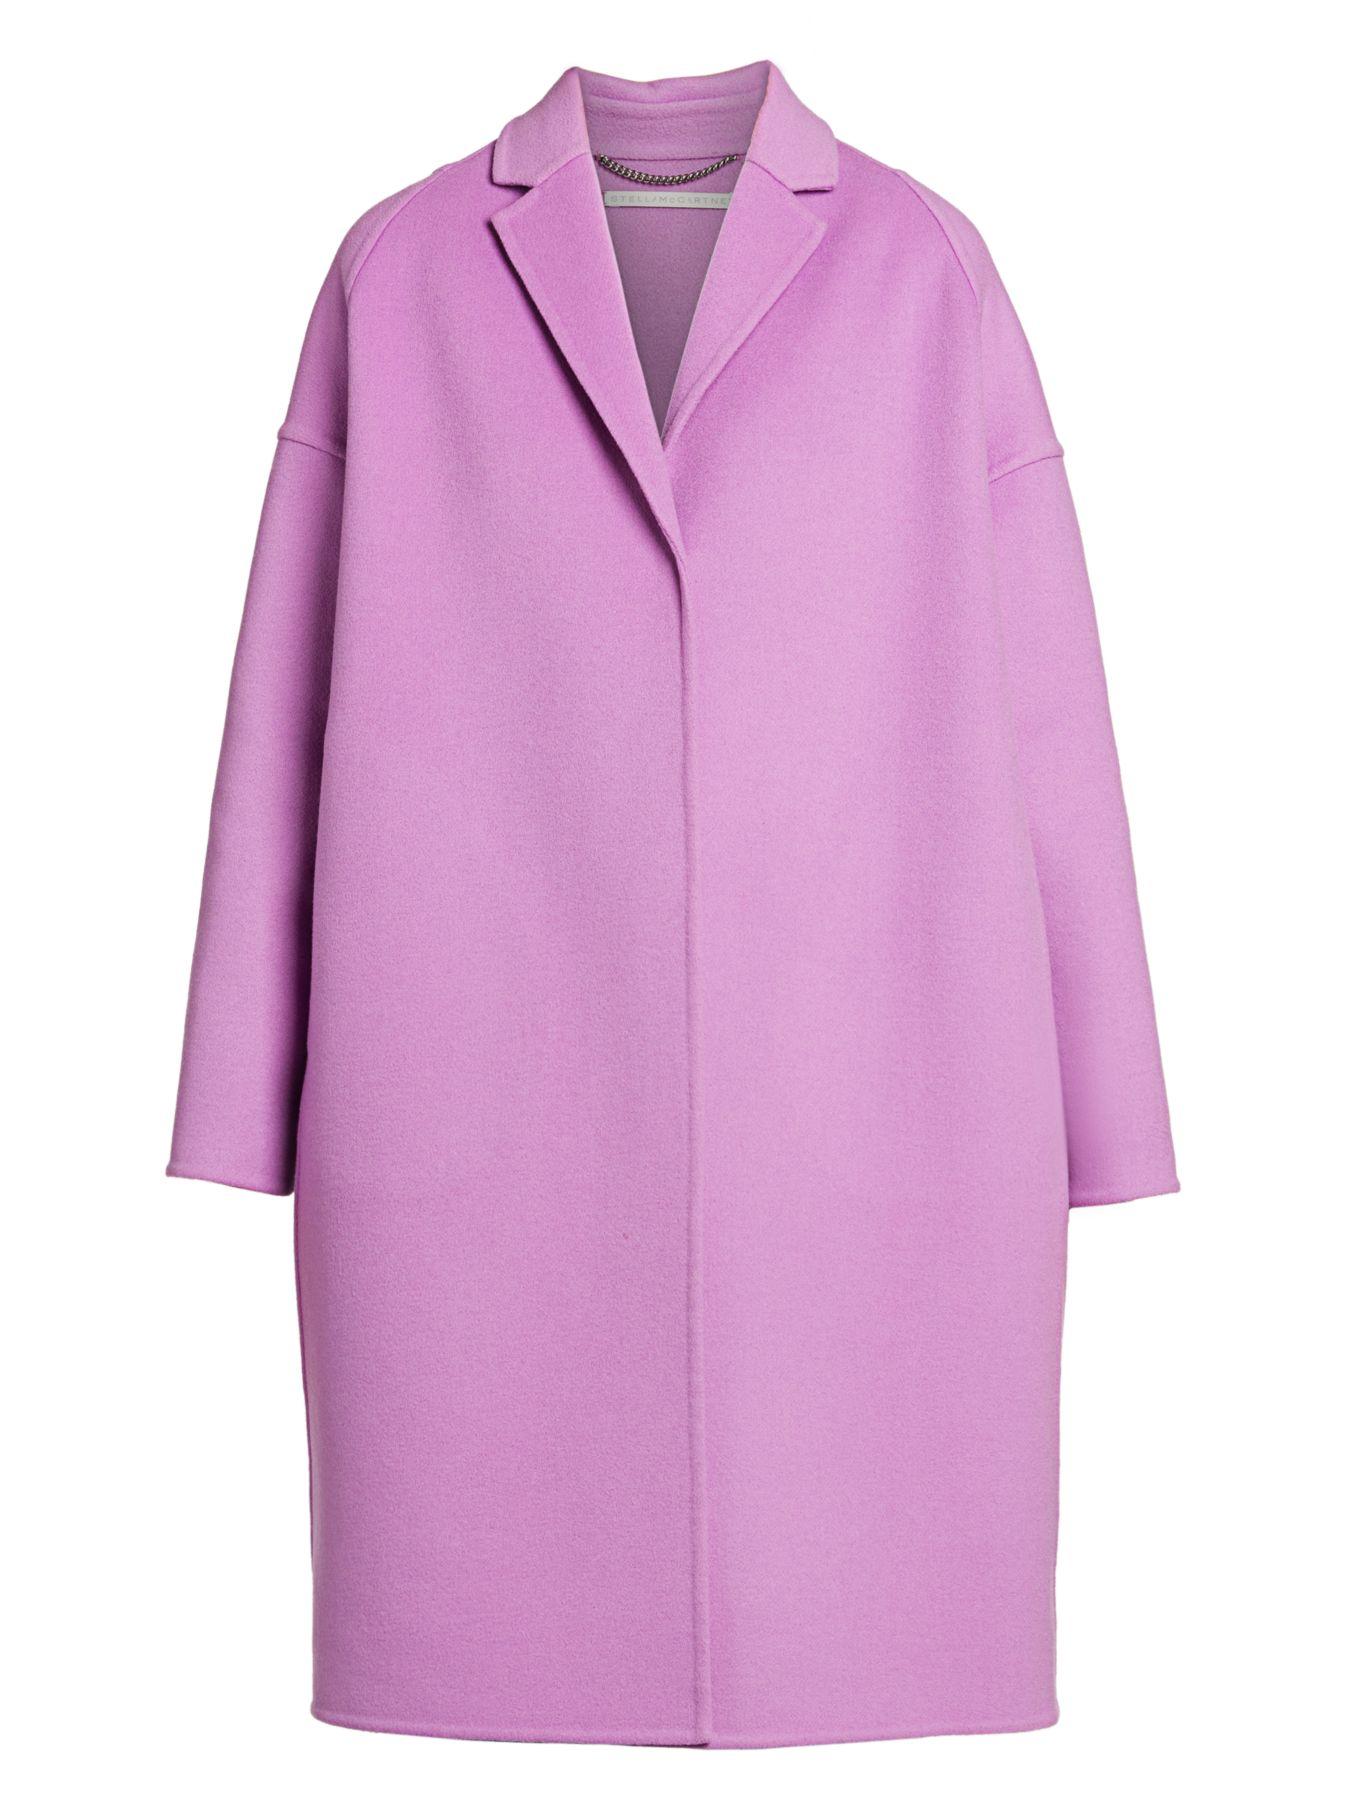 Stella McCartney Bilpin Wool Coat in Lavender (Purple) - Save 40% - Lyst